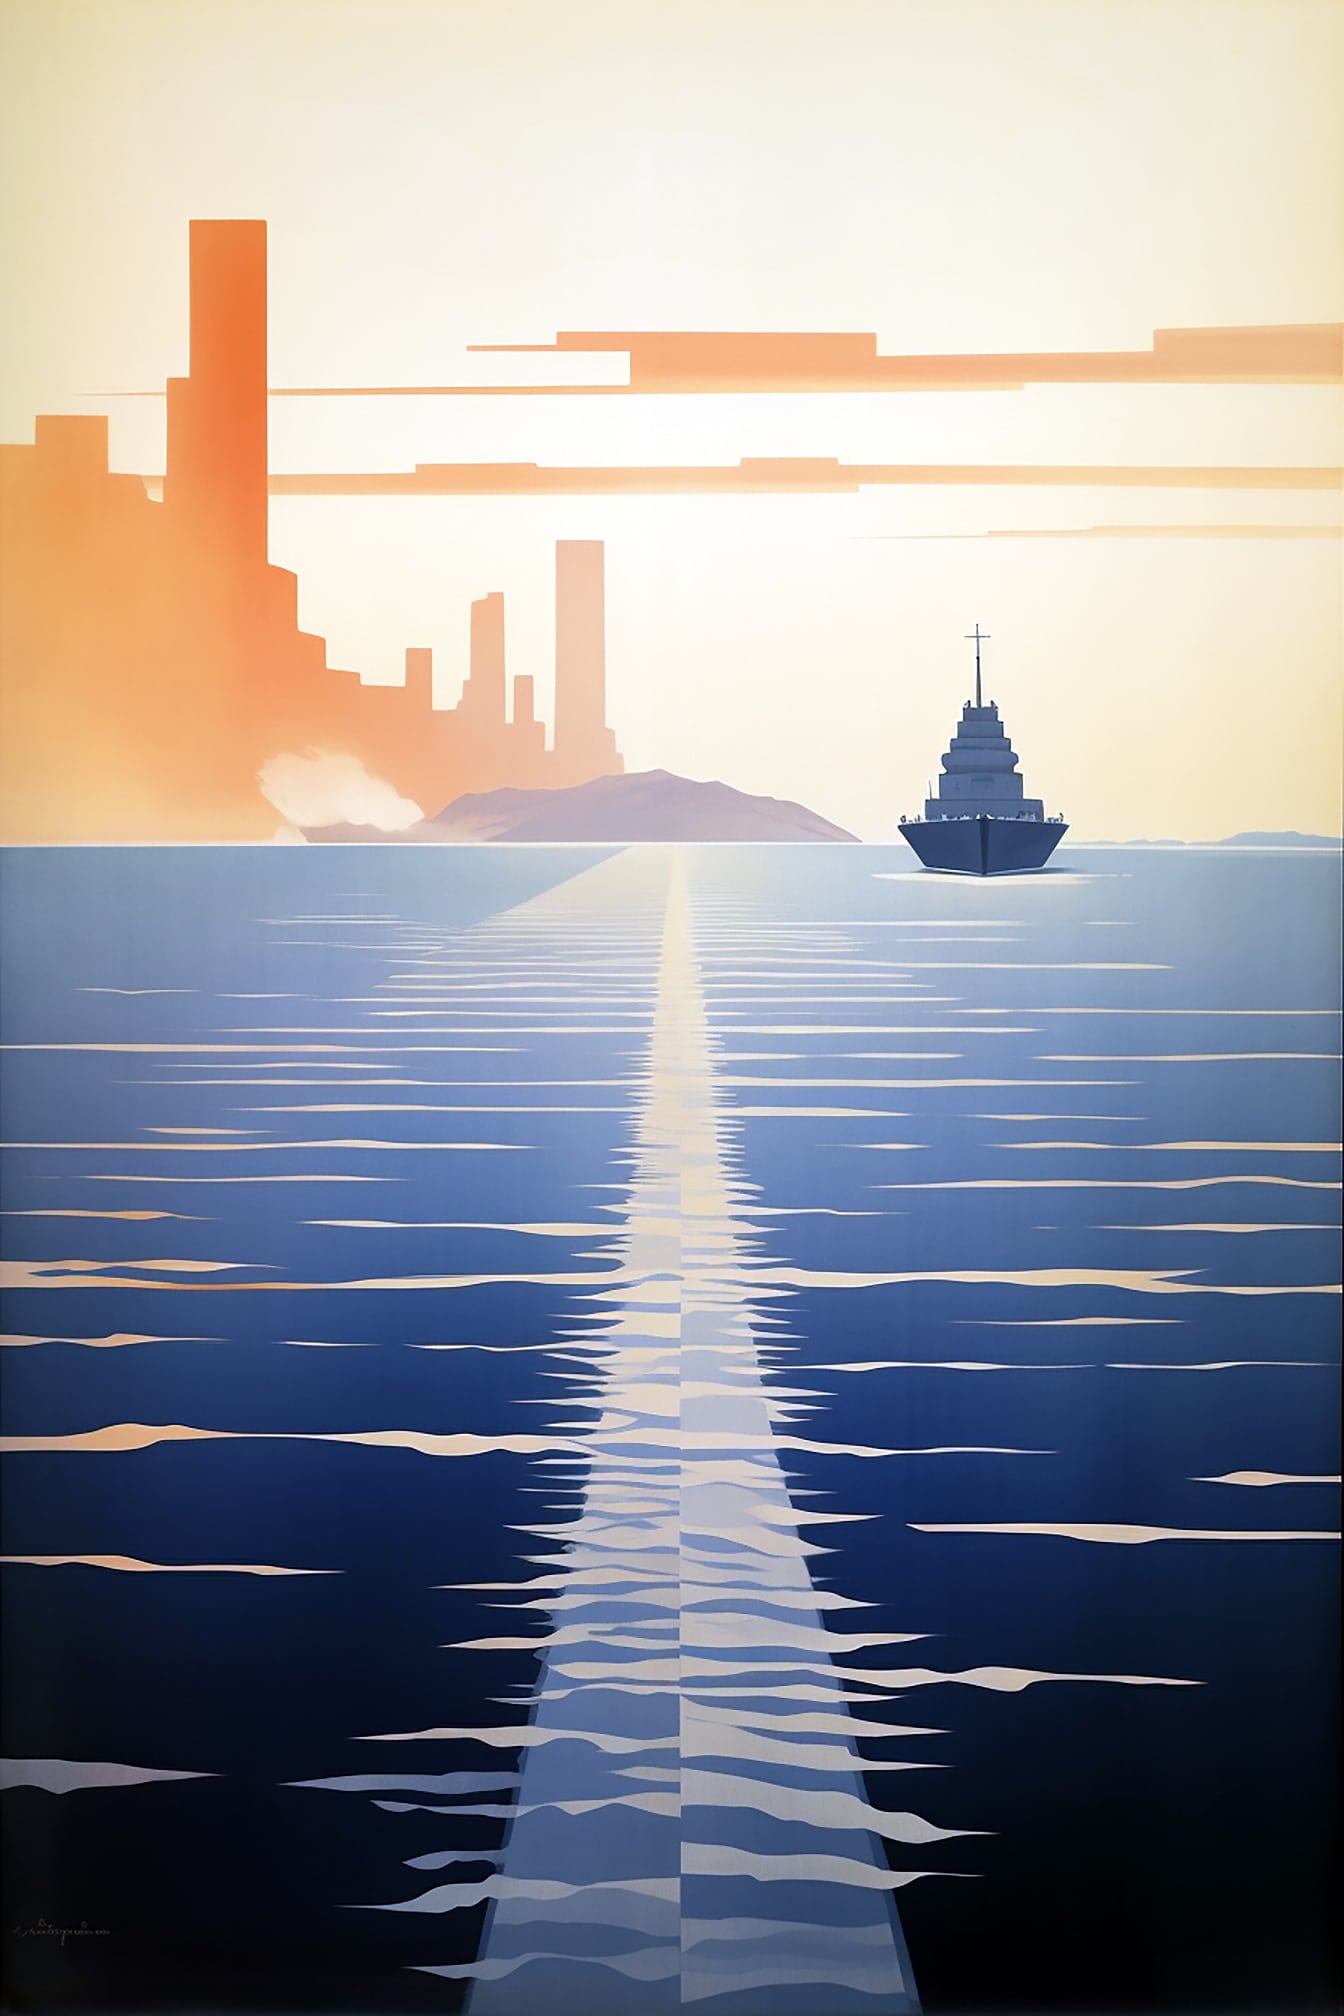 Donkerblauw silhouet van cruiseschip Illustratie in minimalismestijl